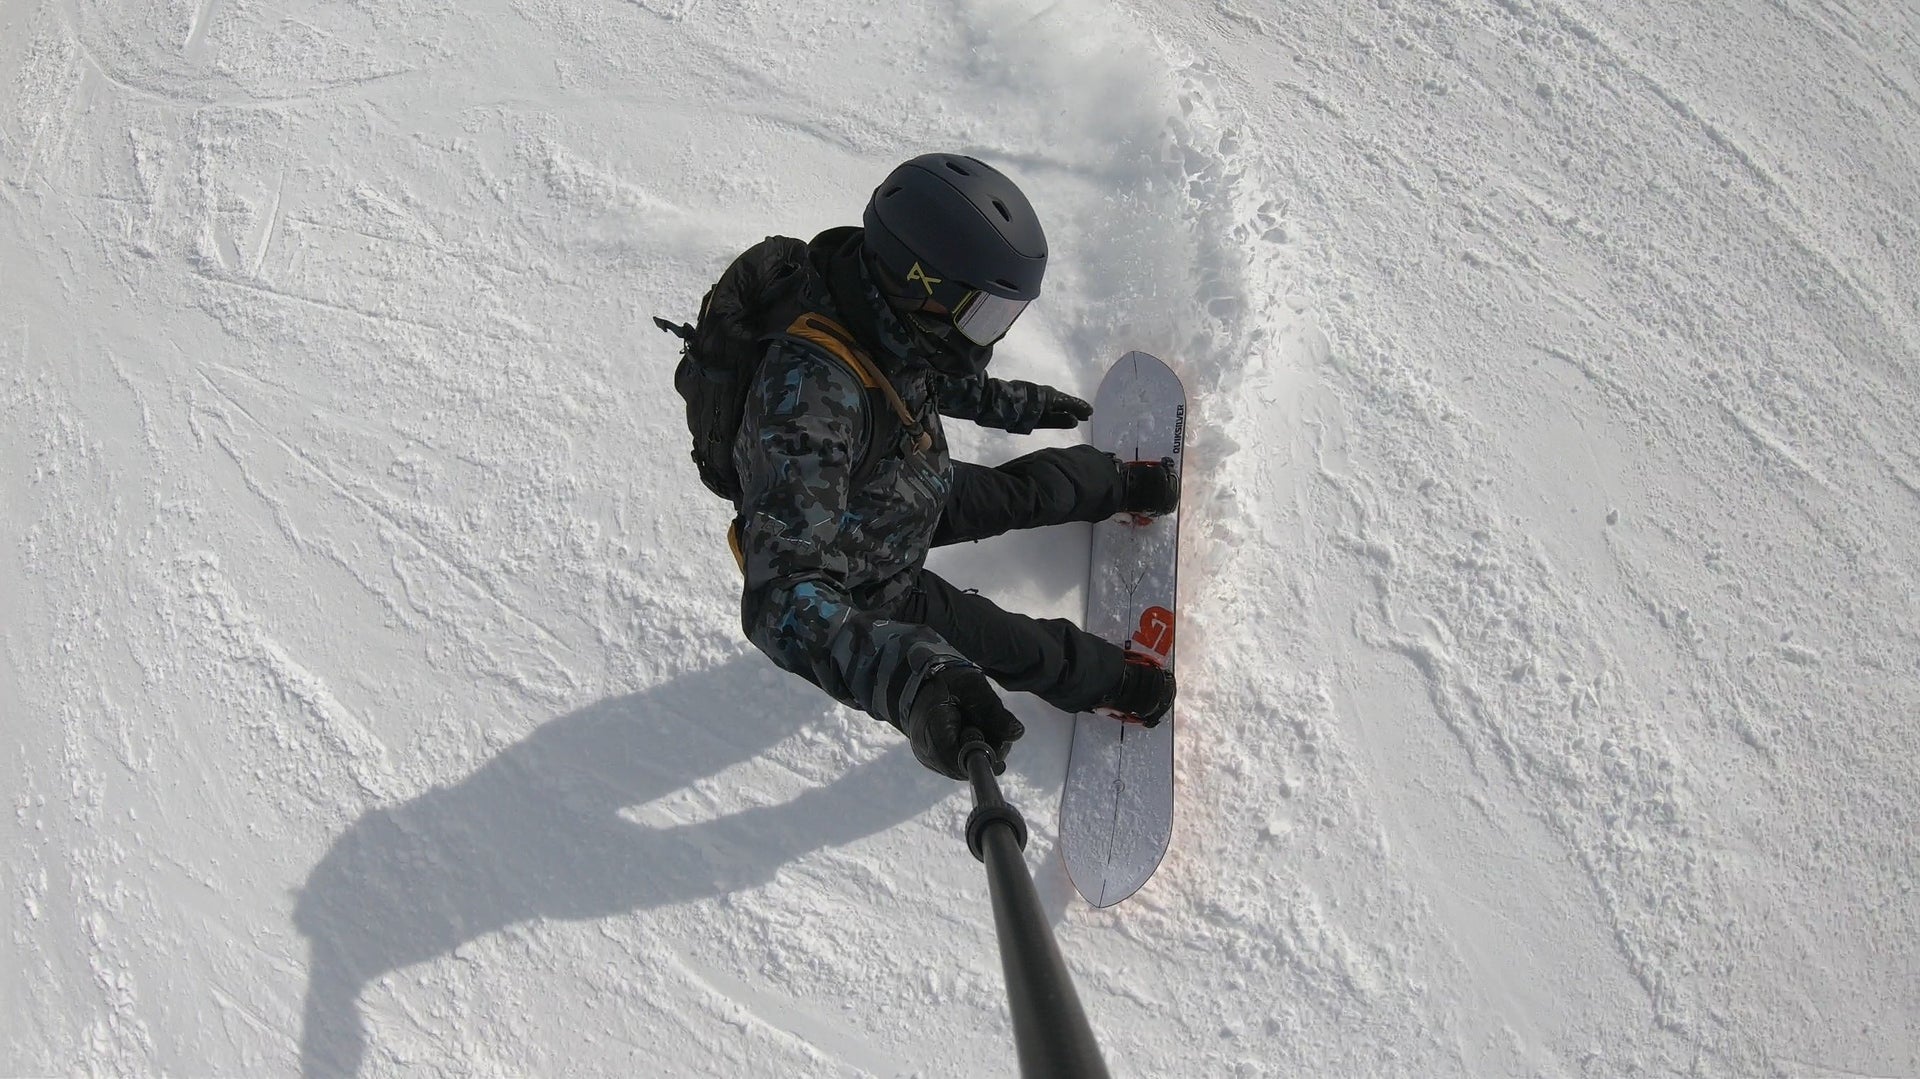 Burton Show Stopper Snowboard Review. | Snowboarding Forum